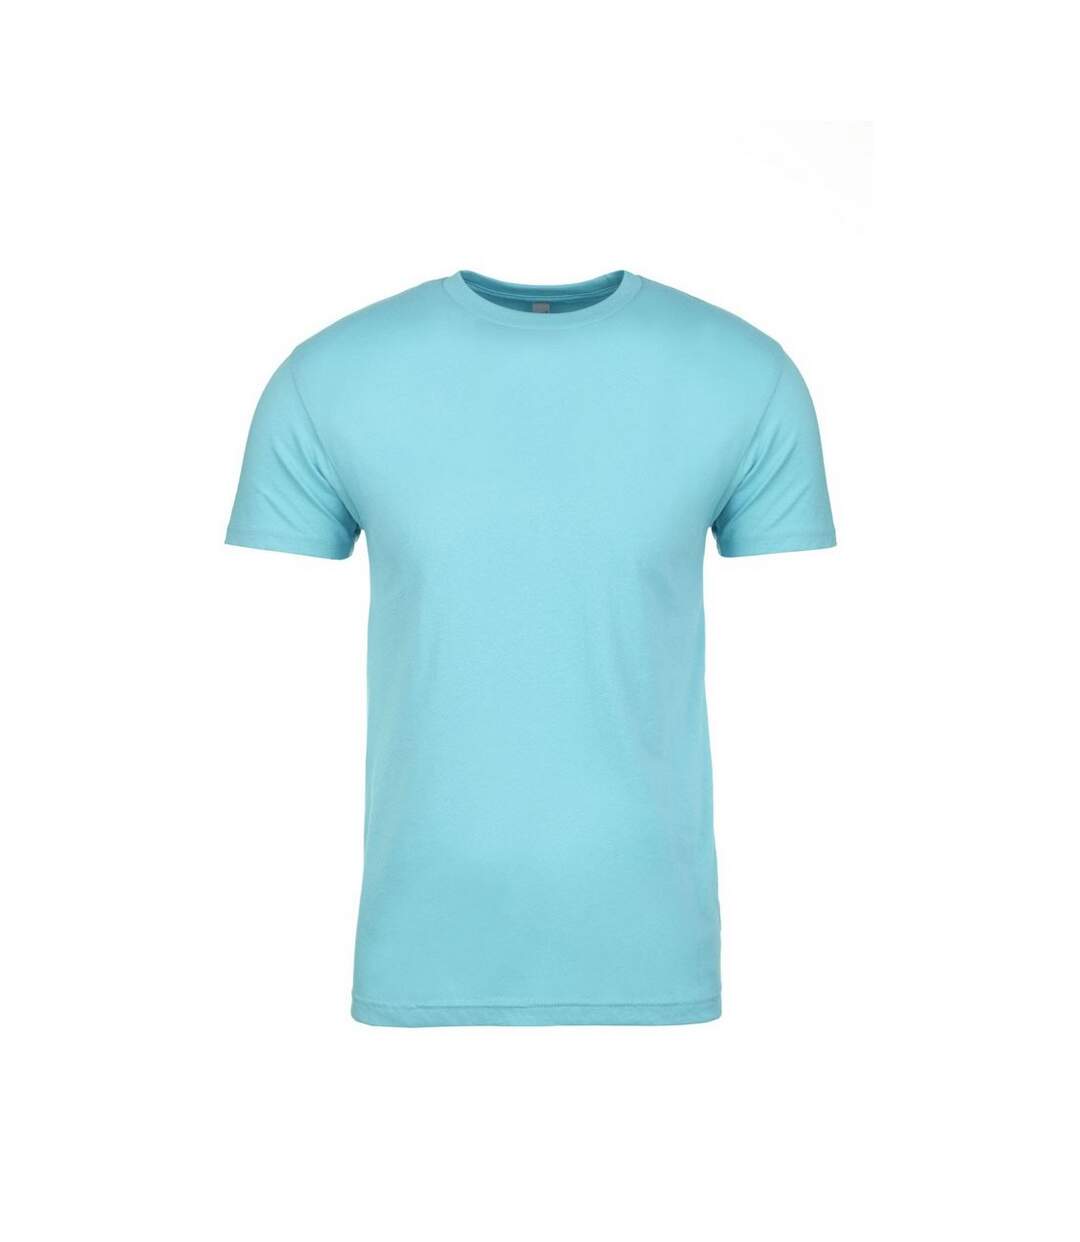 Next Level - T-shirt - Adulte (Turquoise clair) - UTPC3482